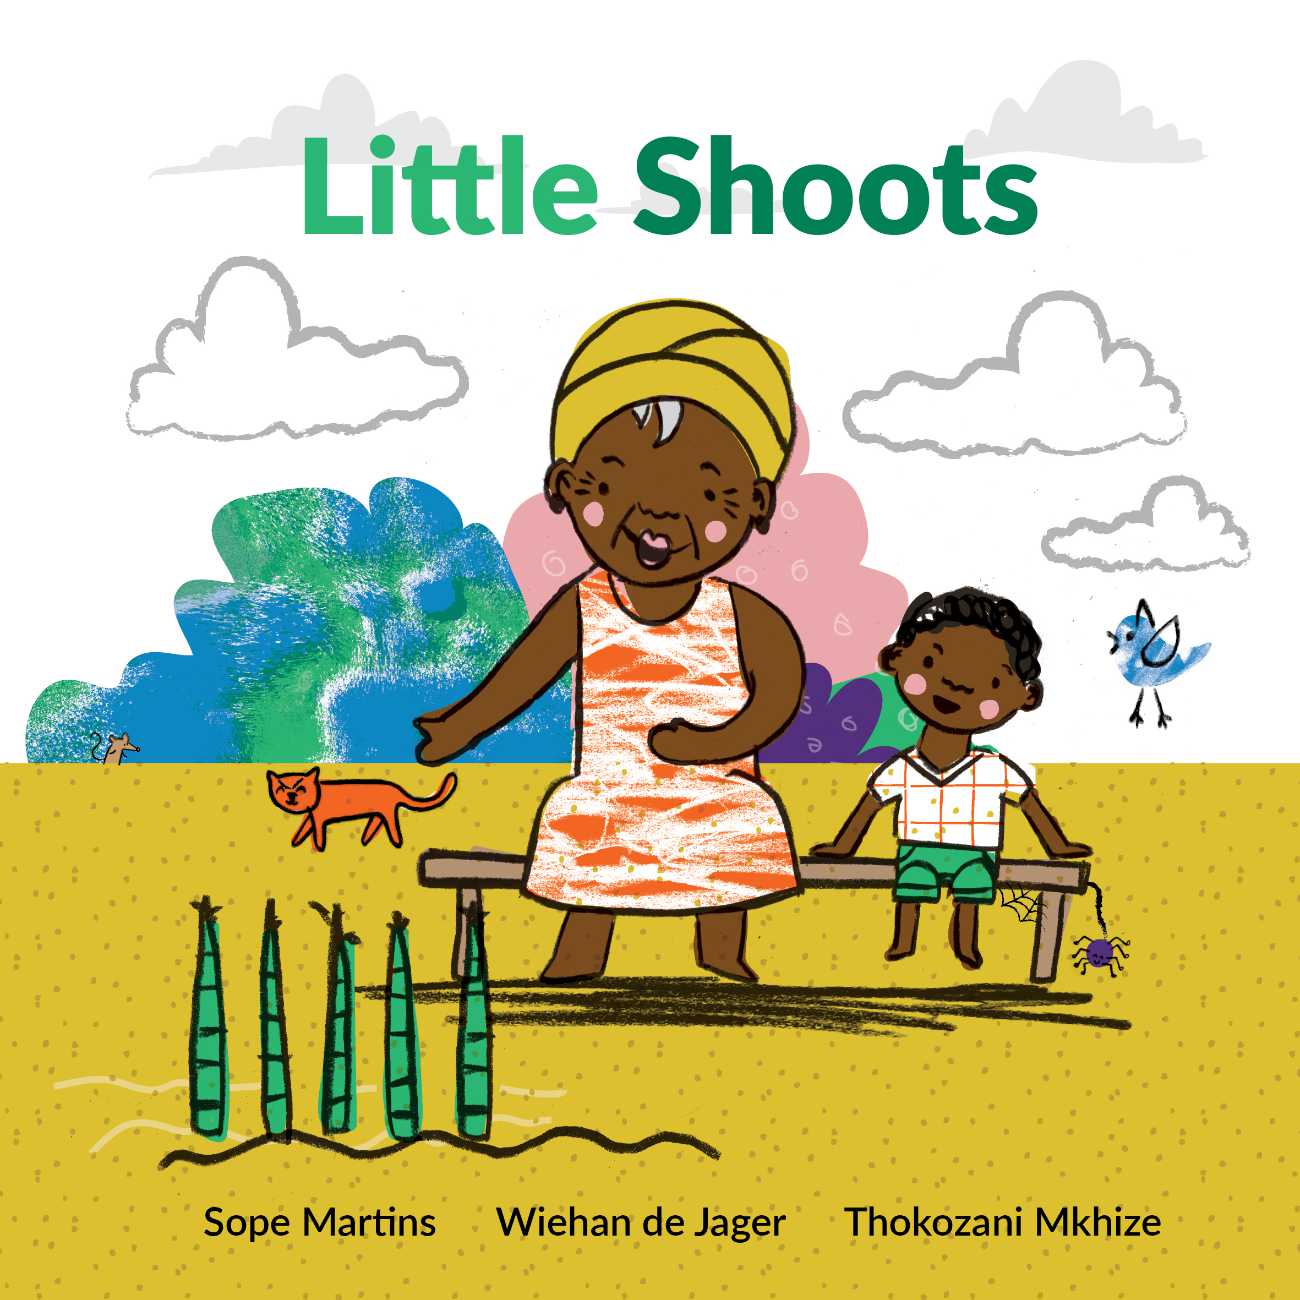 Little Shoots | Short Stories for Kids | Bedtime Stories